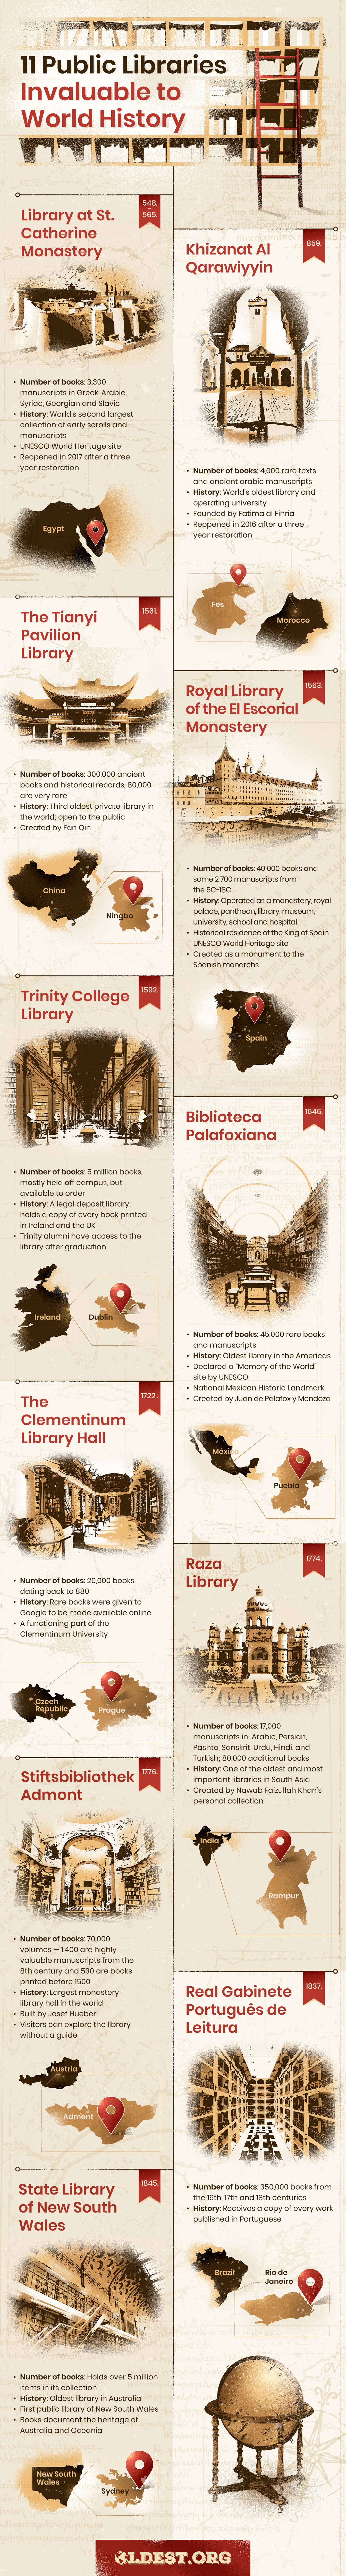 historic libraries